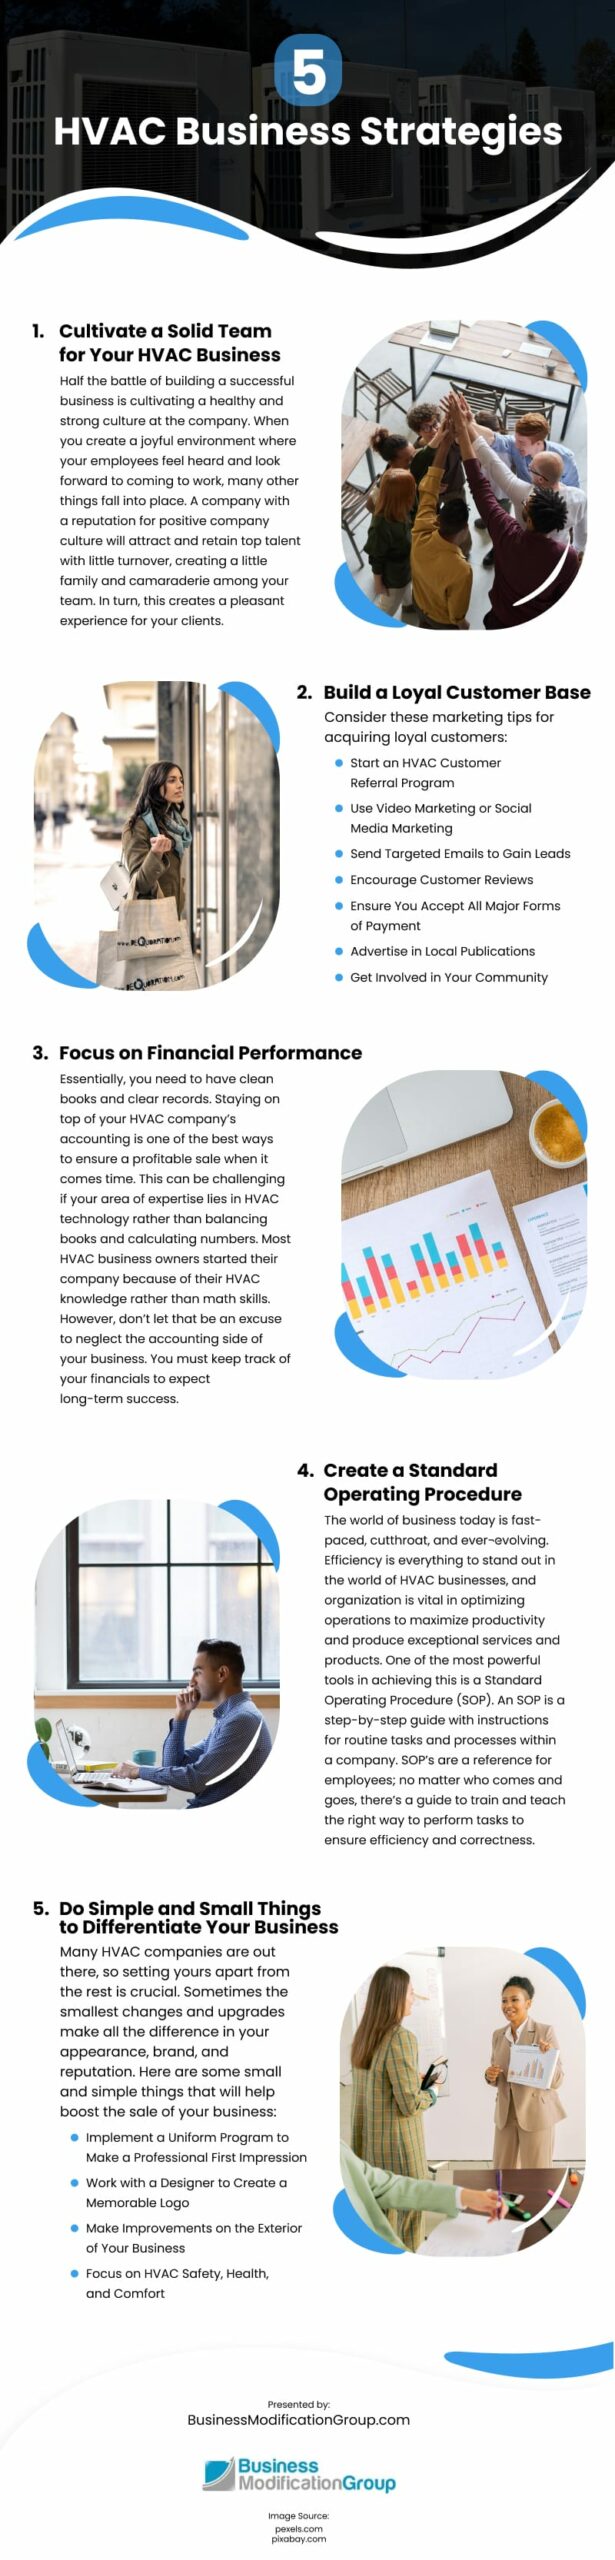 HVAC Business Strategies Infographic